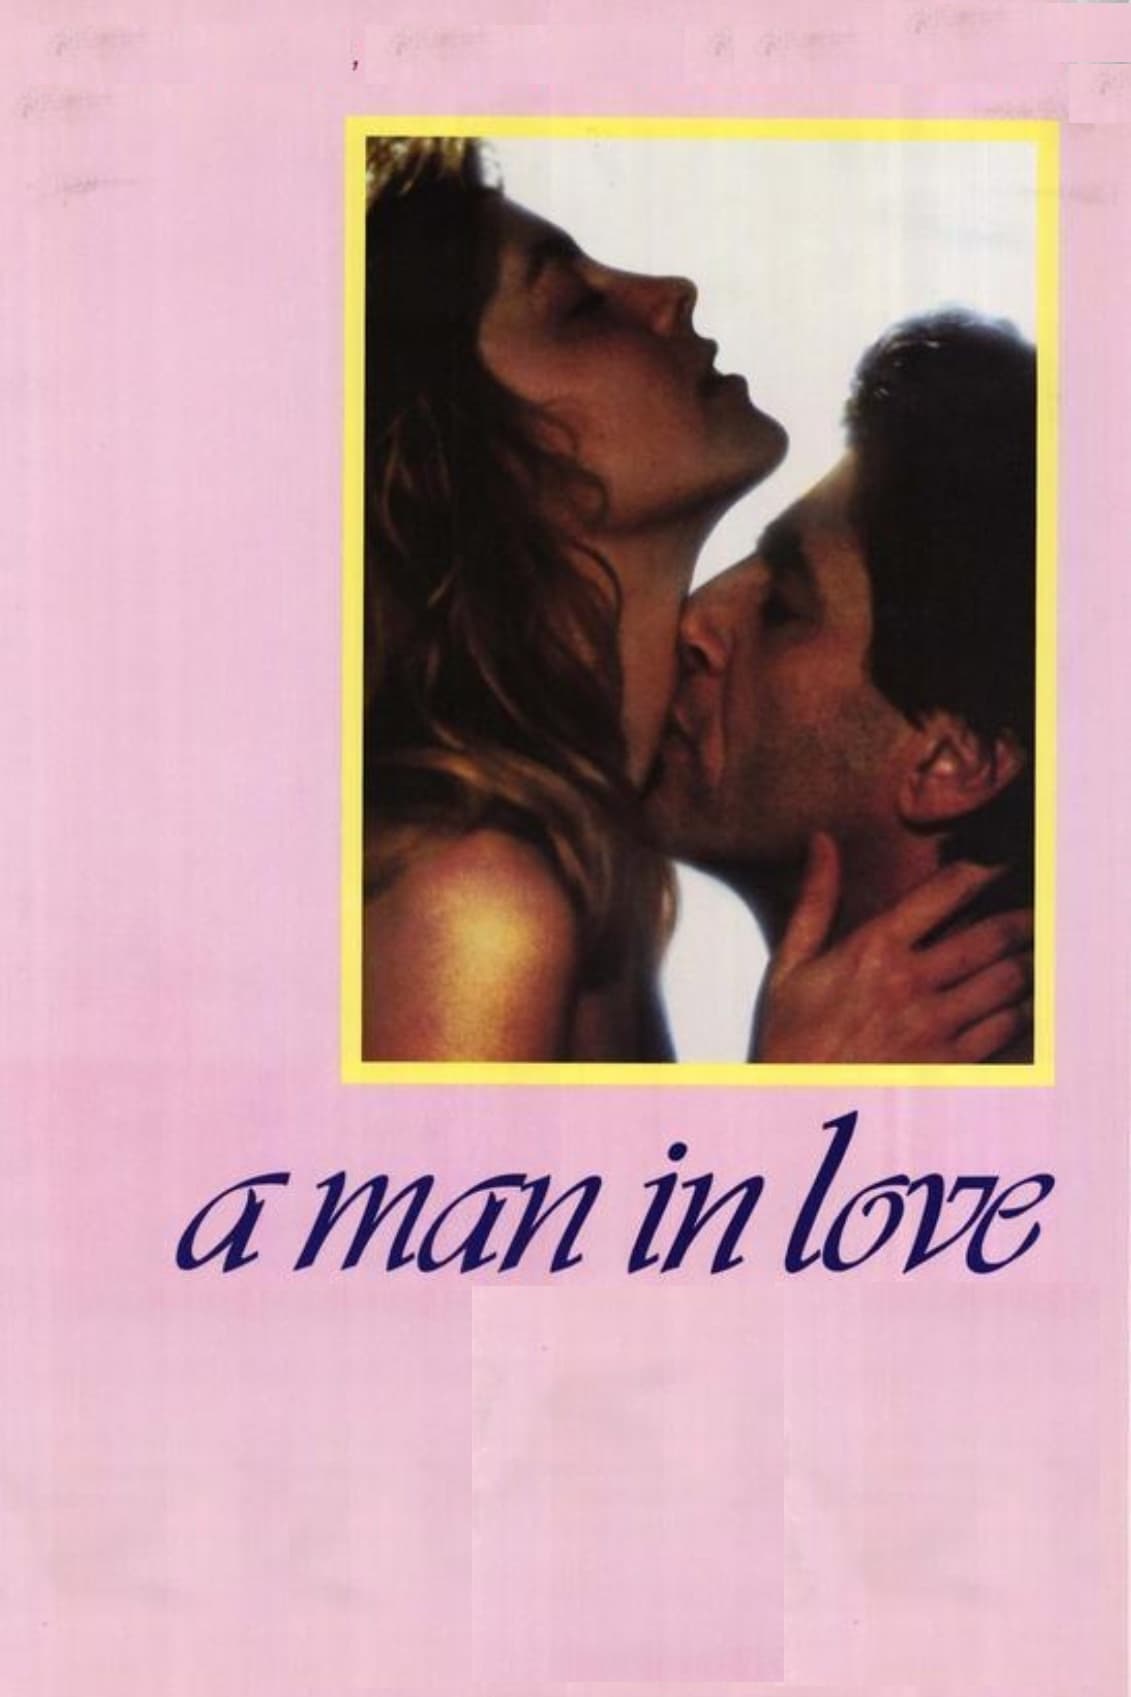 A Man in Love (1987)